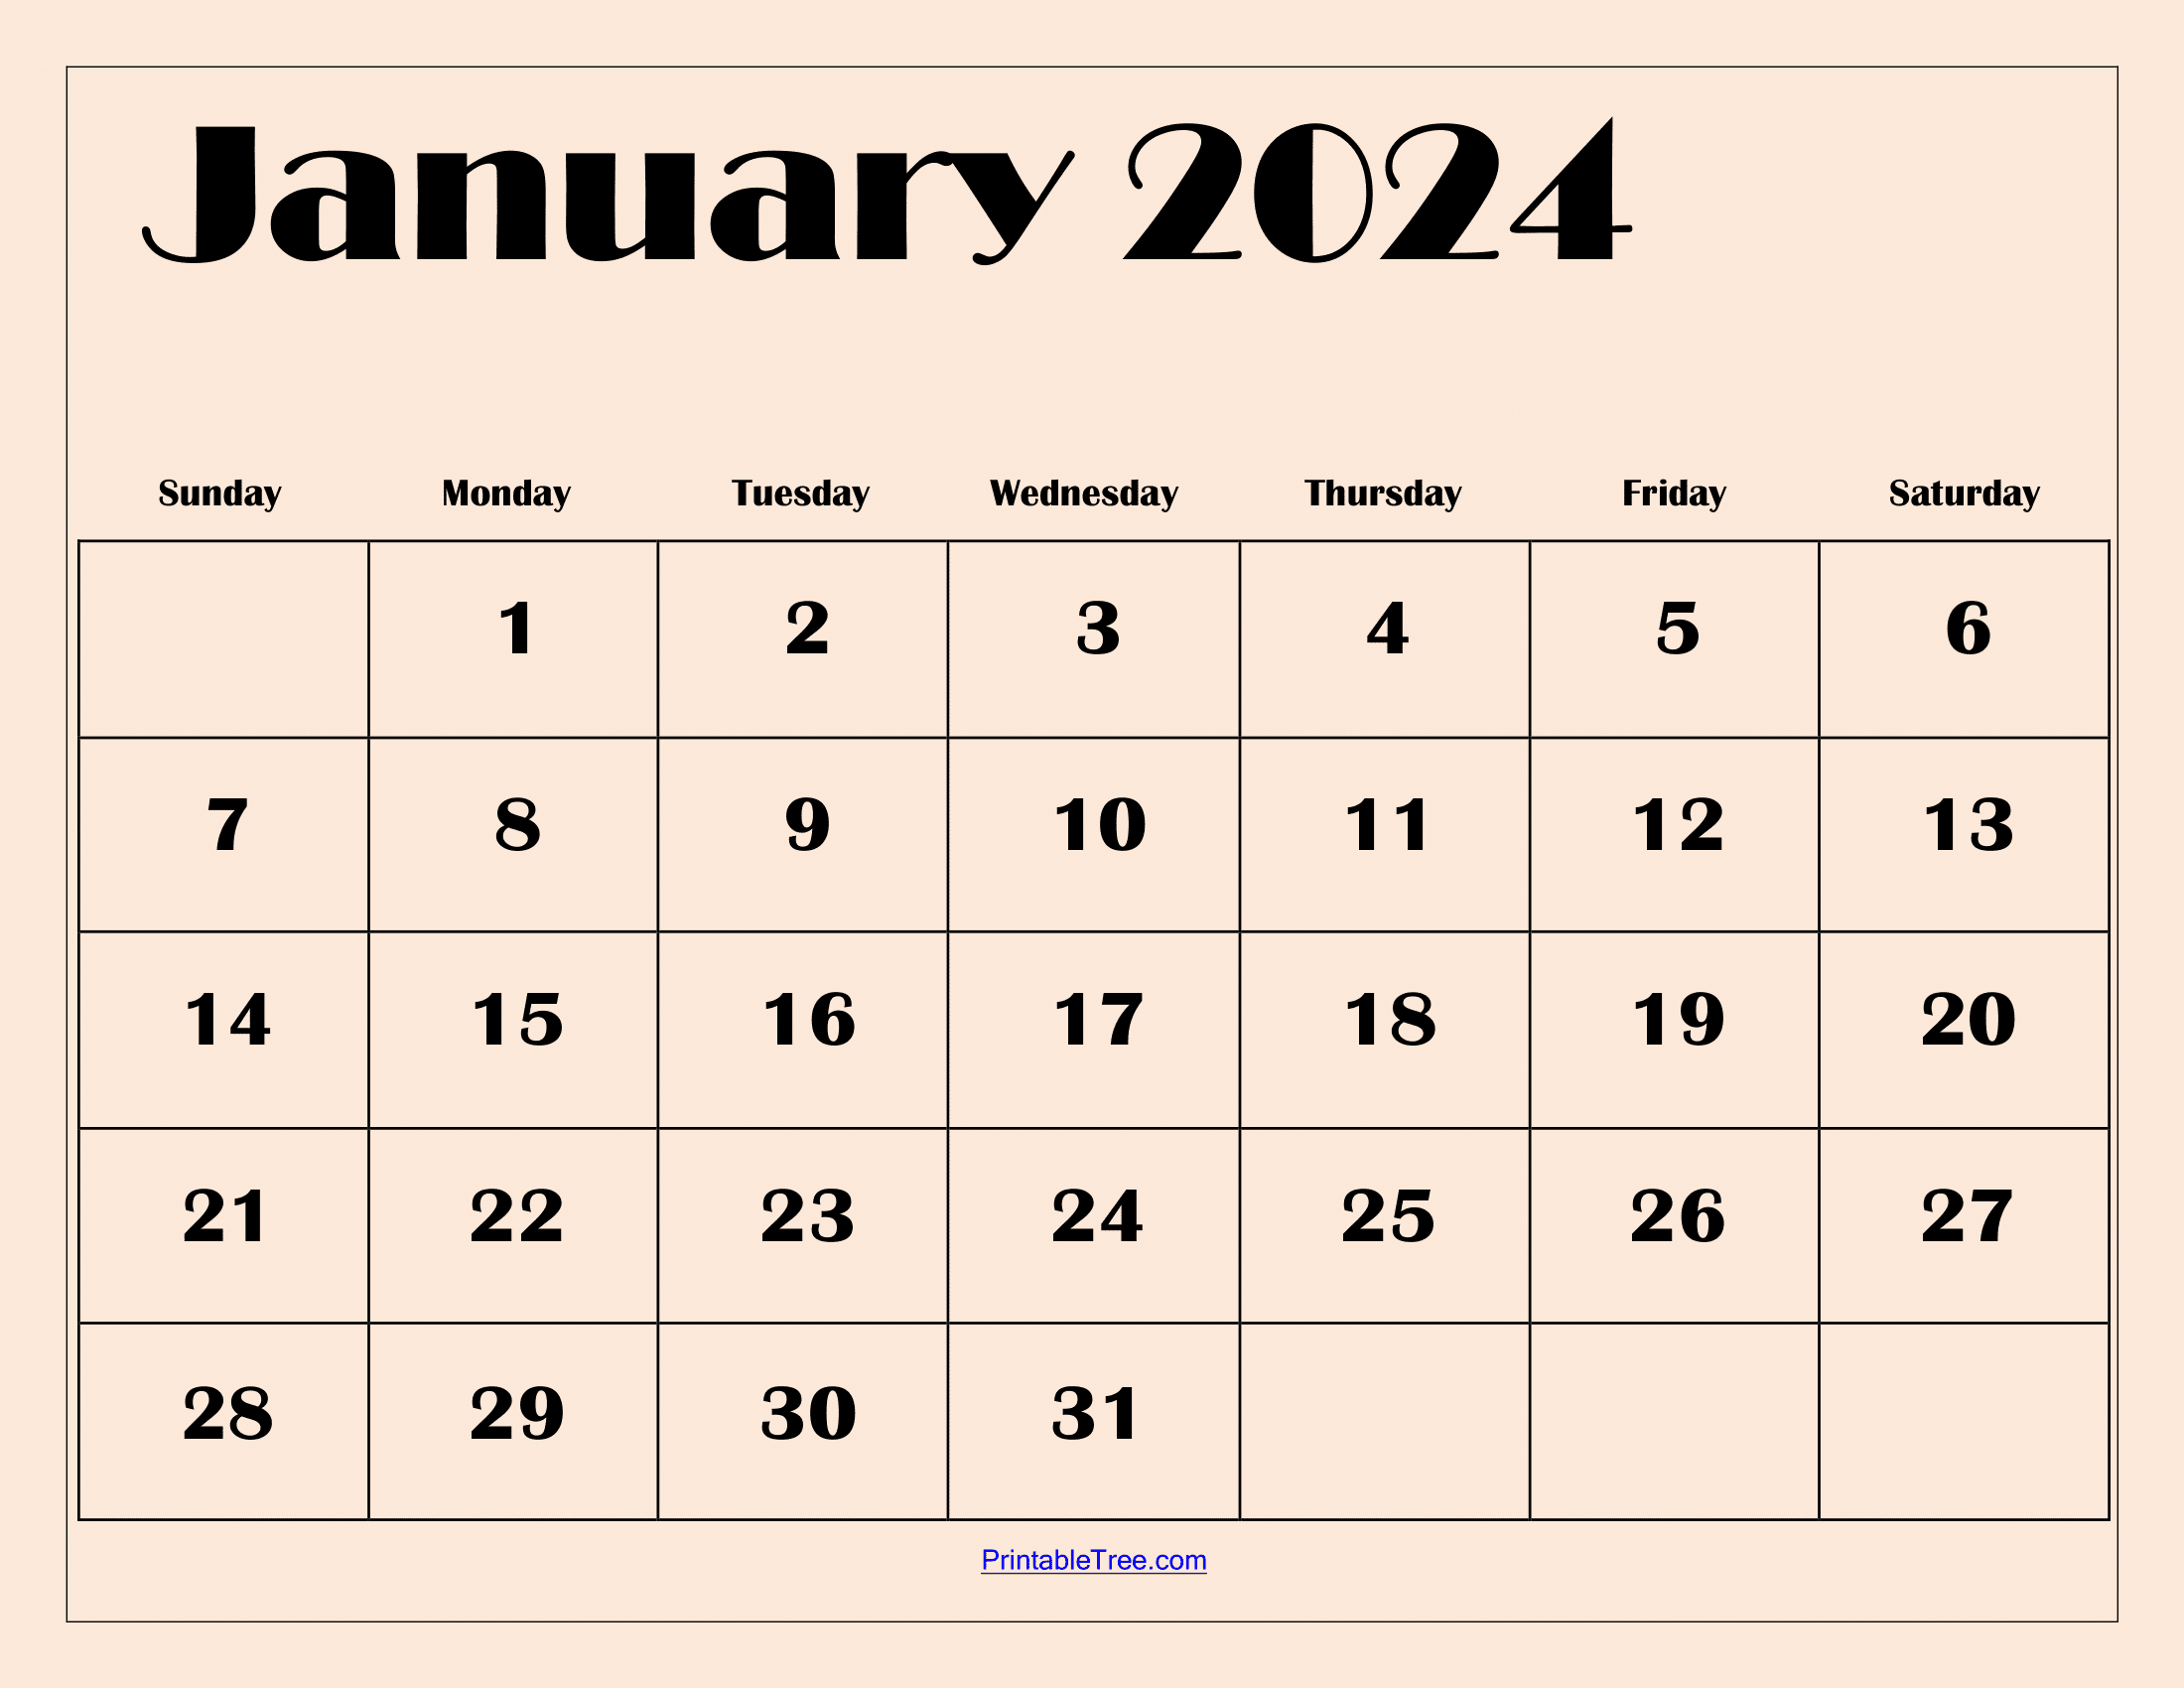 January 2024 Calendar Printable Pdf Template With Holidays for A-Printable-Calendar January 2024